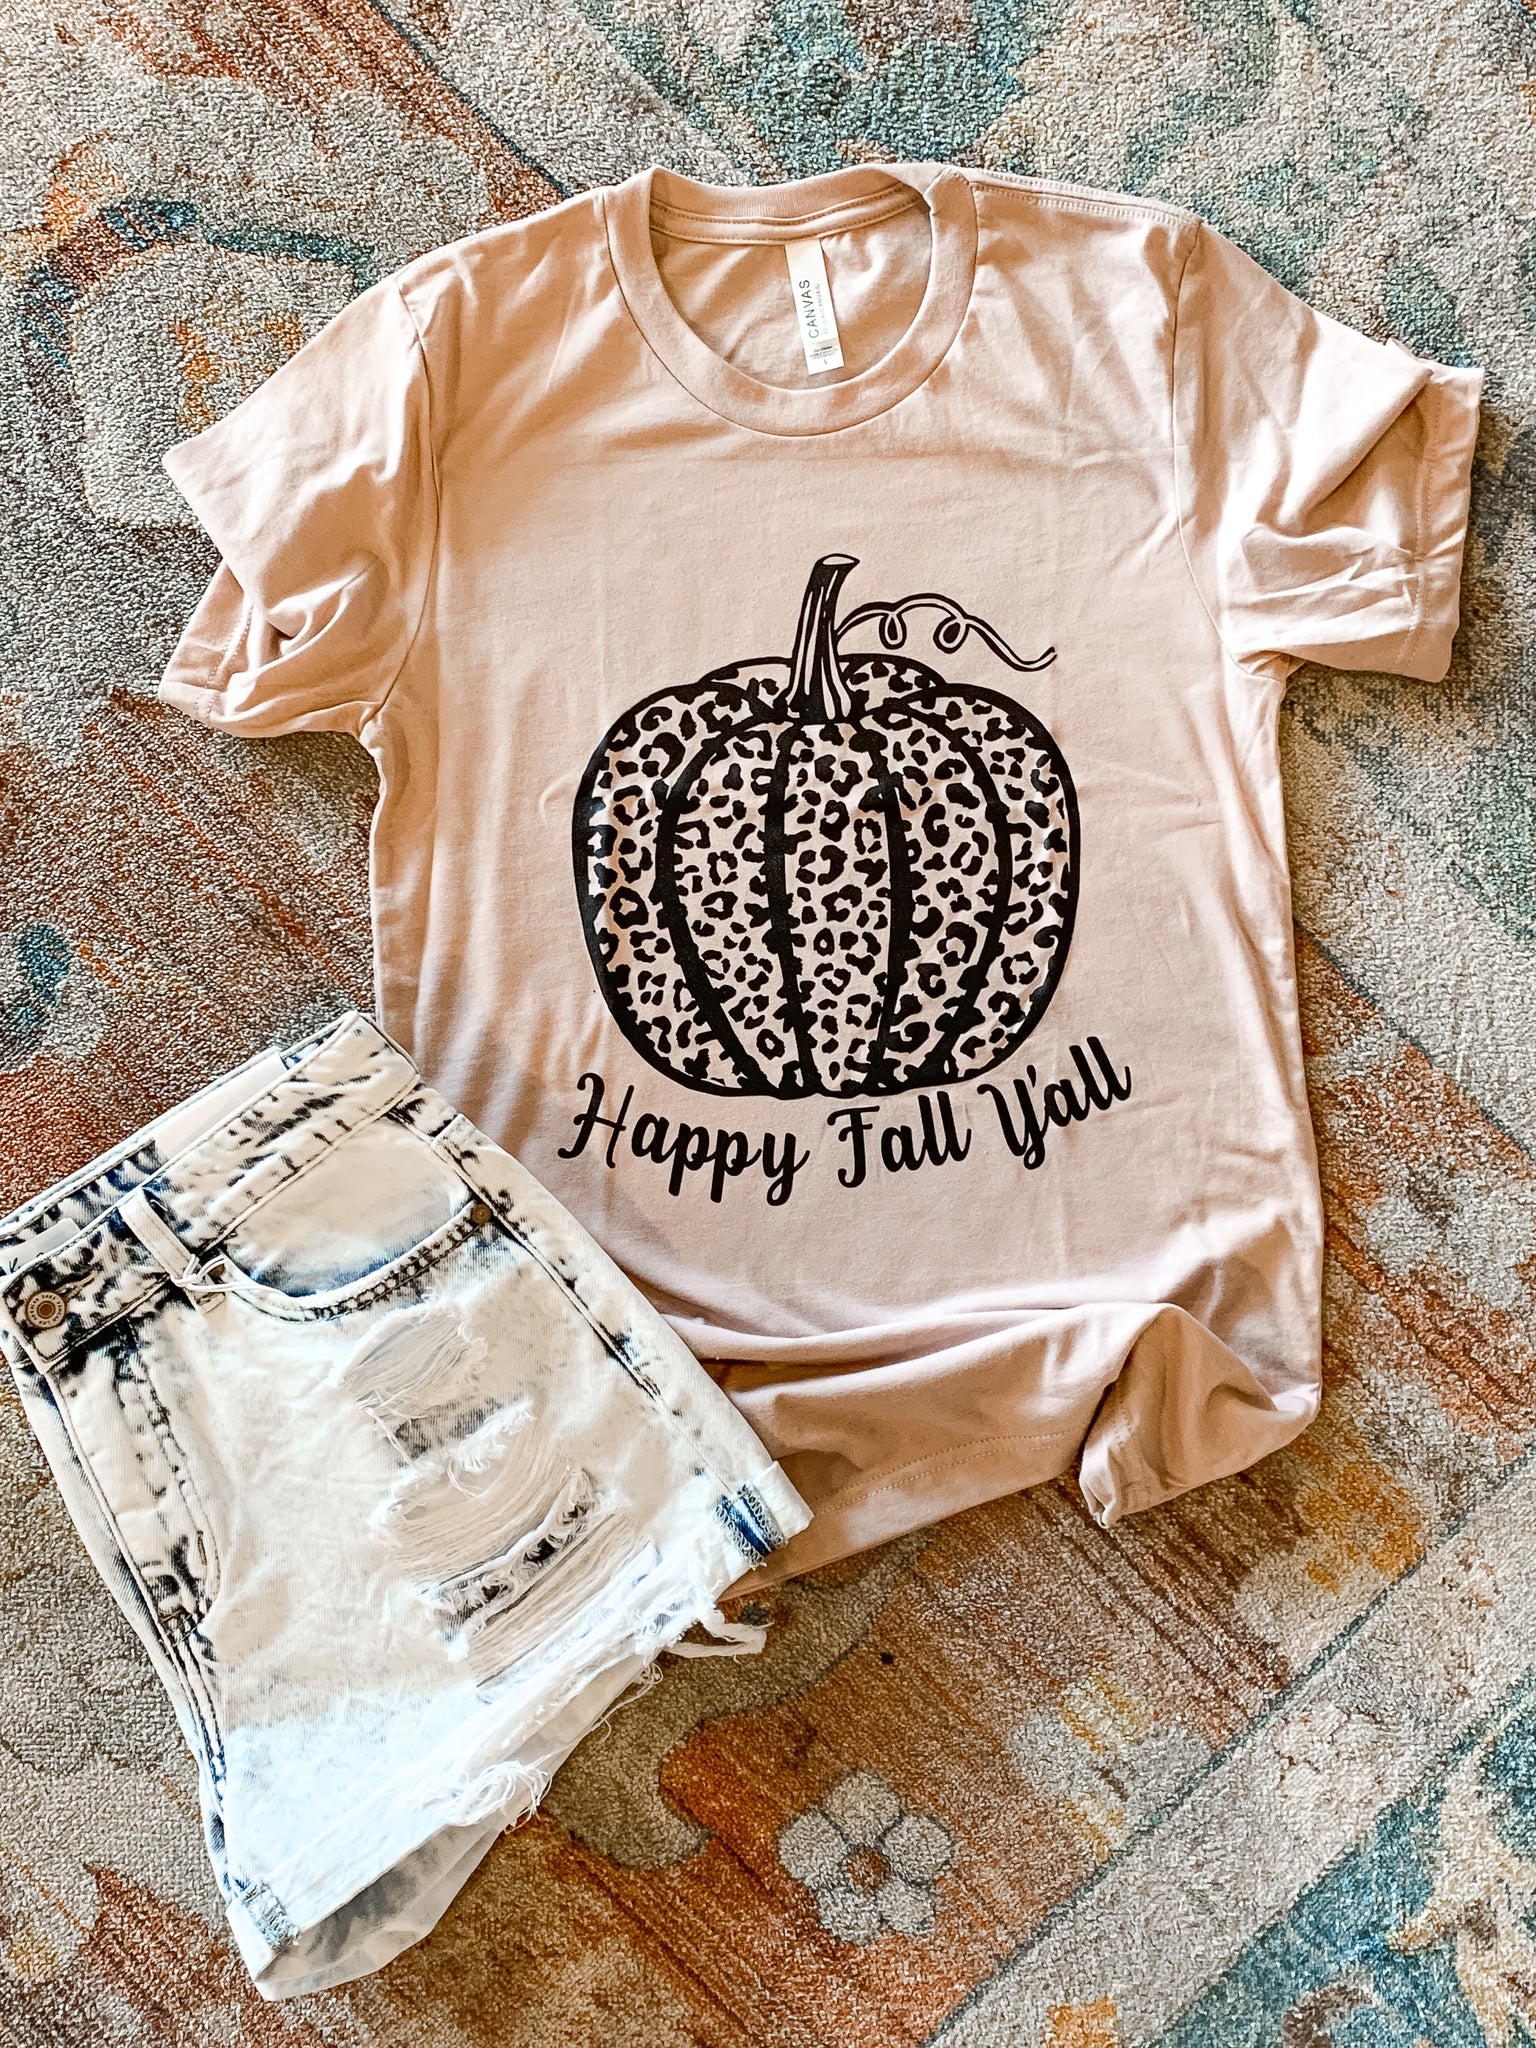 Happy Fall Y’all Tee